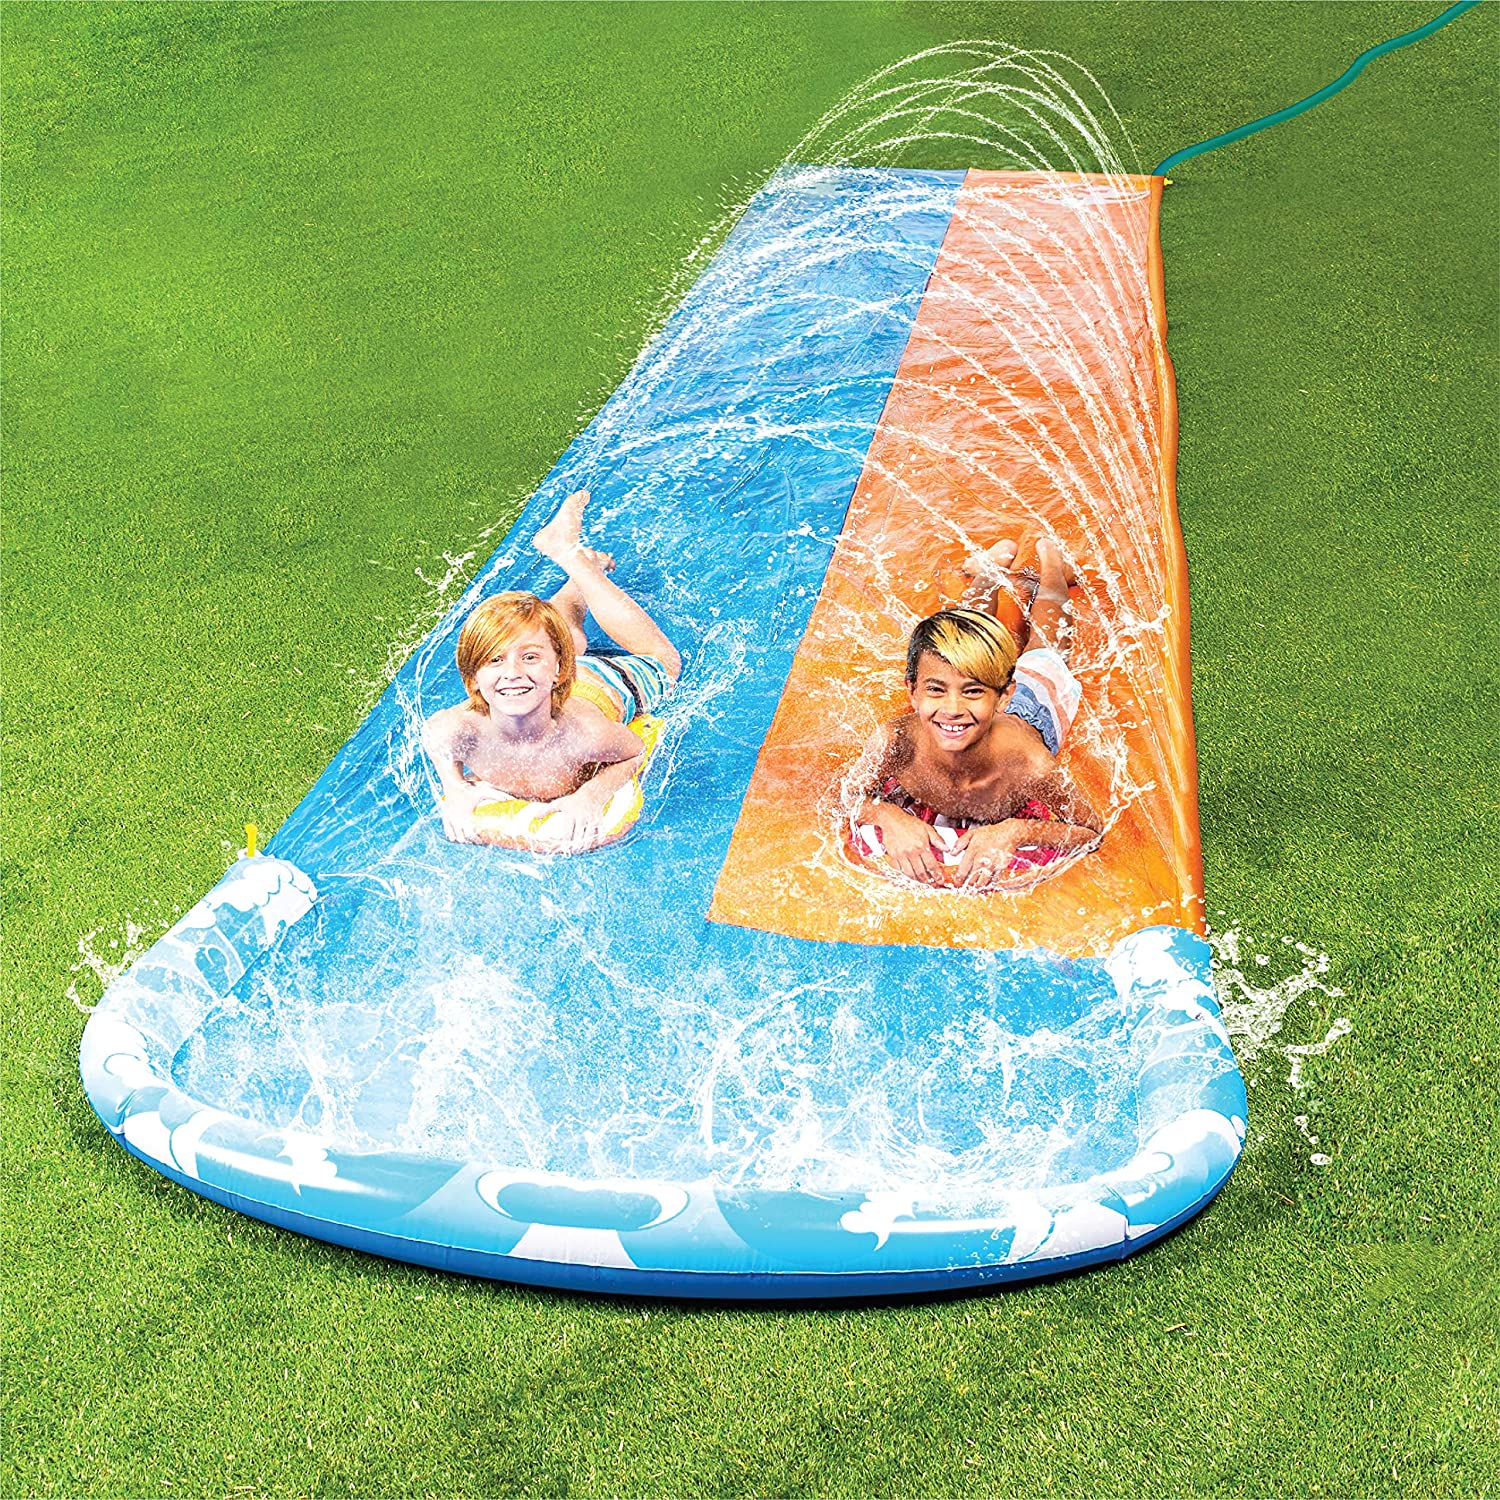 22.5ft Slip Water Slide with 2 Bodyboards